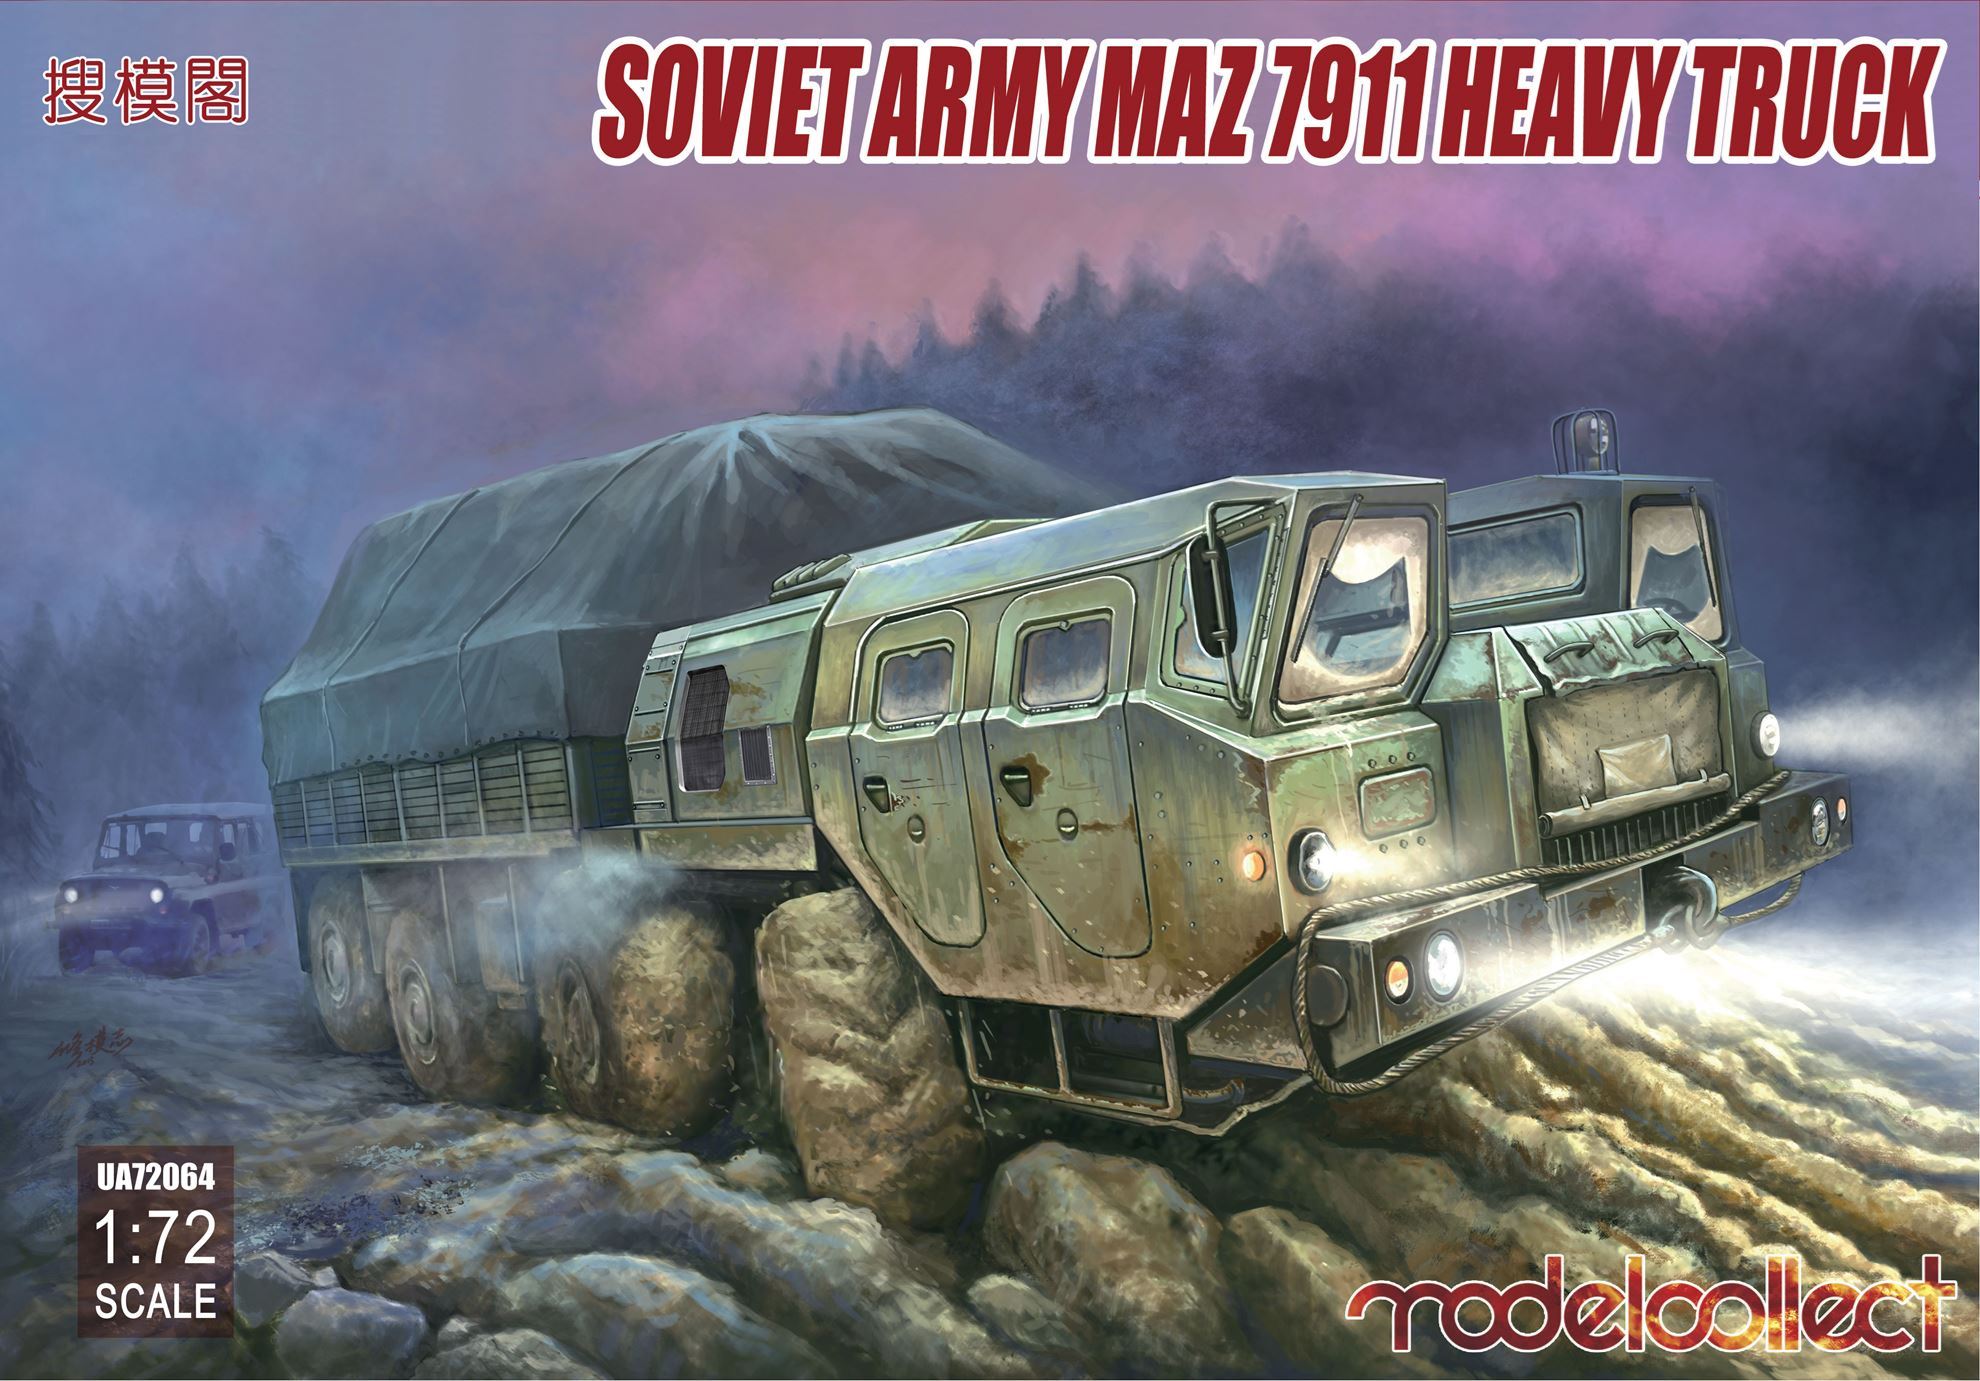 Soviet Army MAZ 7311 Heavy truck